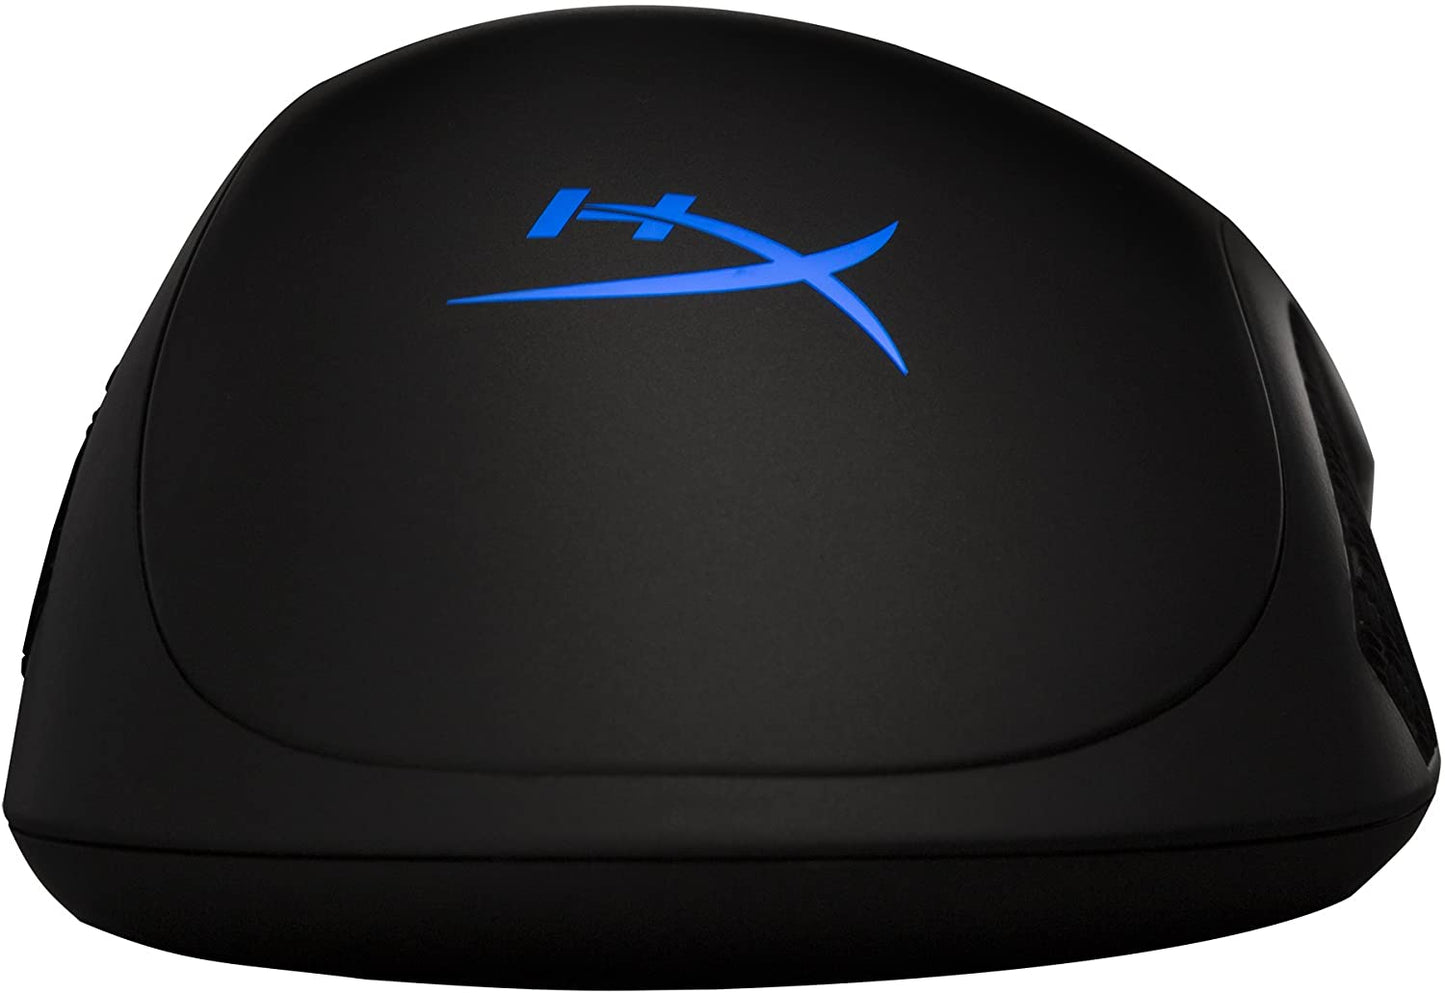 HyperX HX-MC003B Pulsefire FPS Pro, Gaming Mouse, Software Controlled RGB Light Effects & Macro Customization, Pixart 3389 Sensor Up to 16,000 DPI, 6 Programmable Buttons